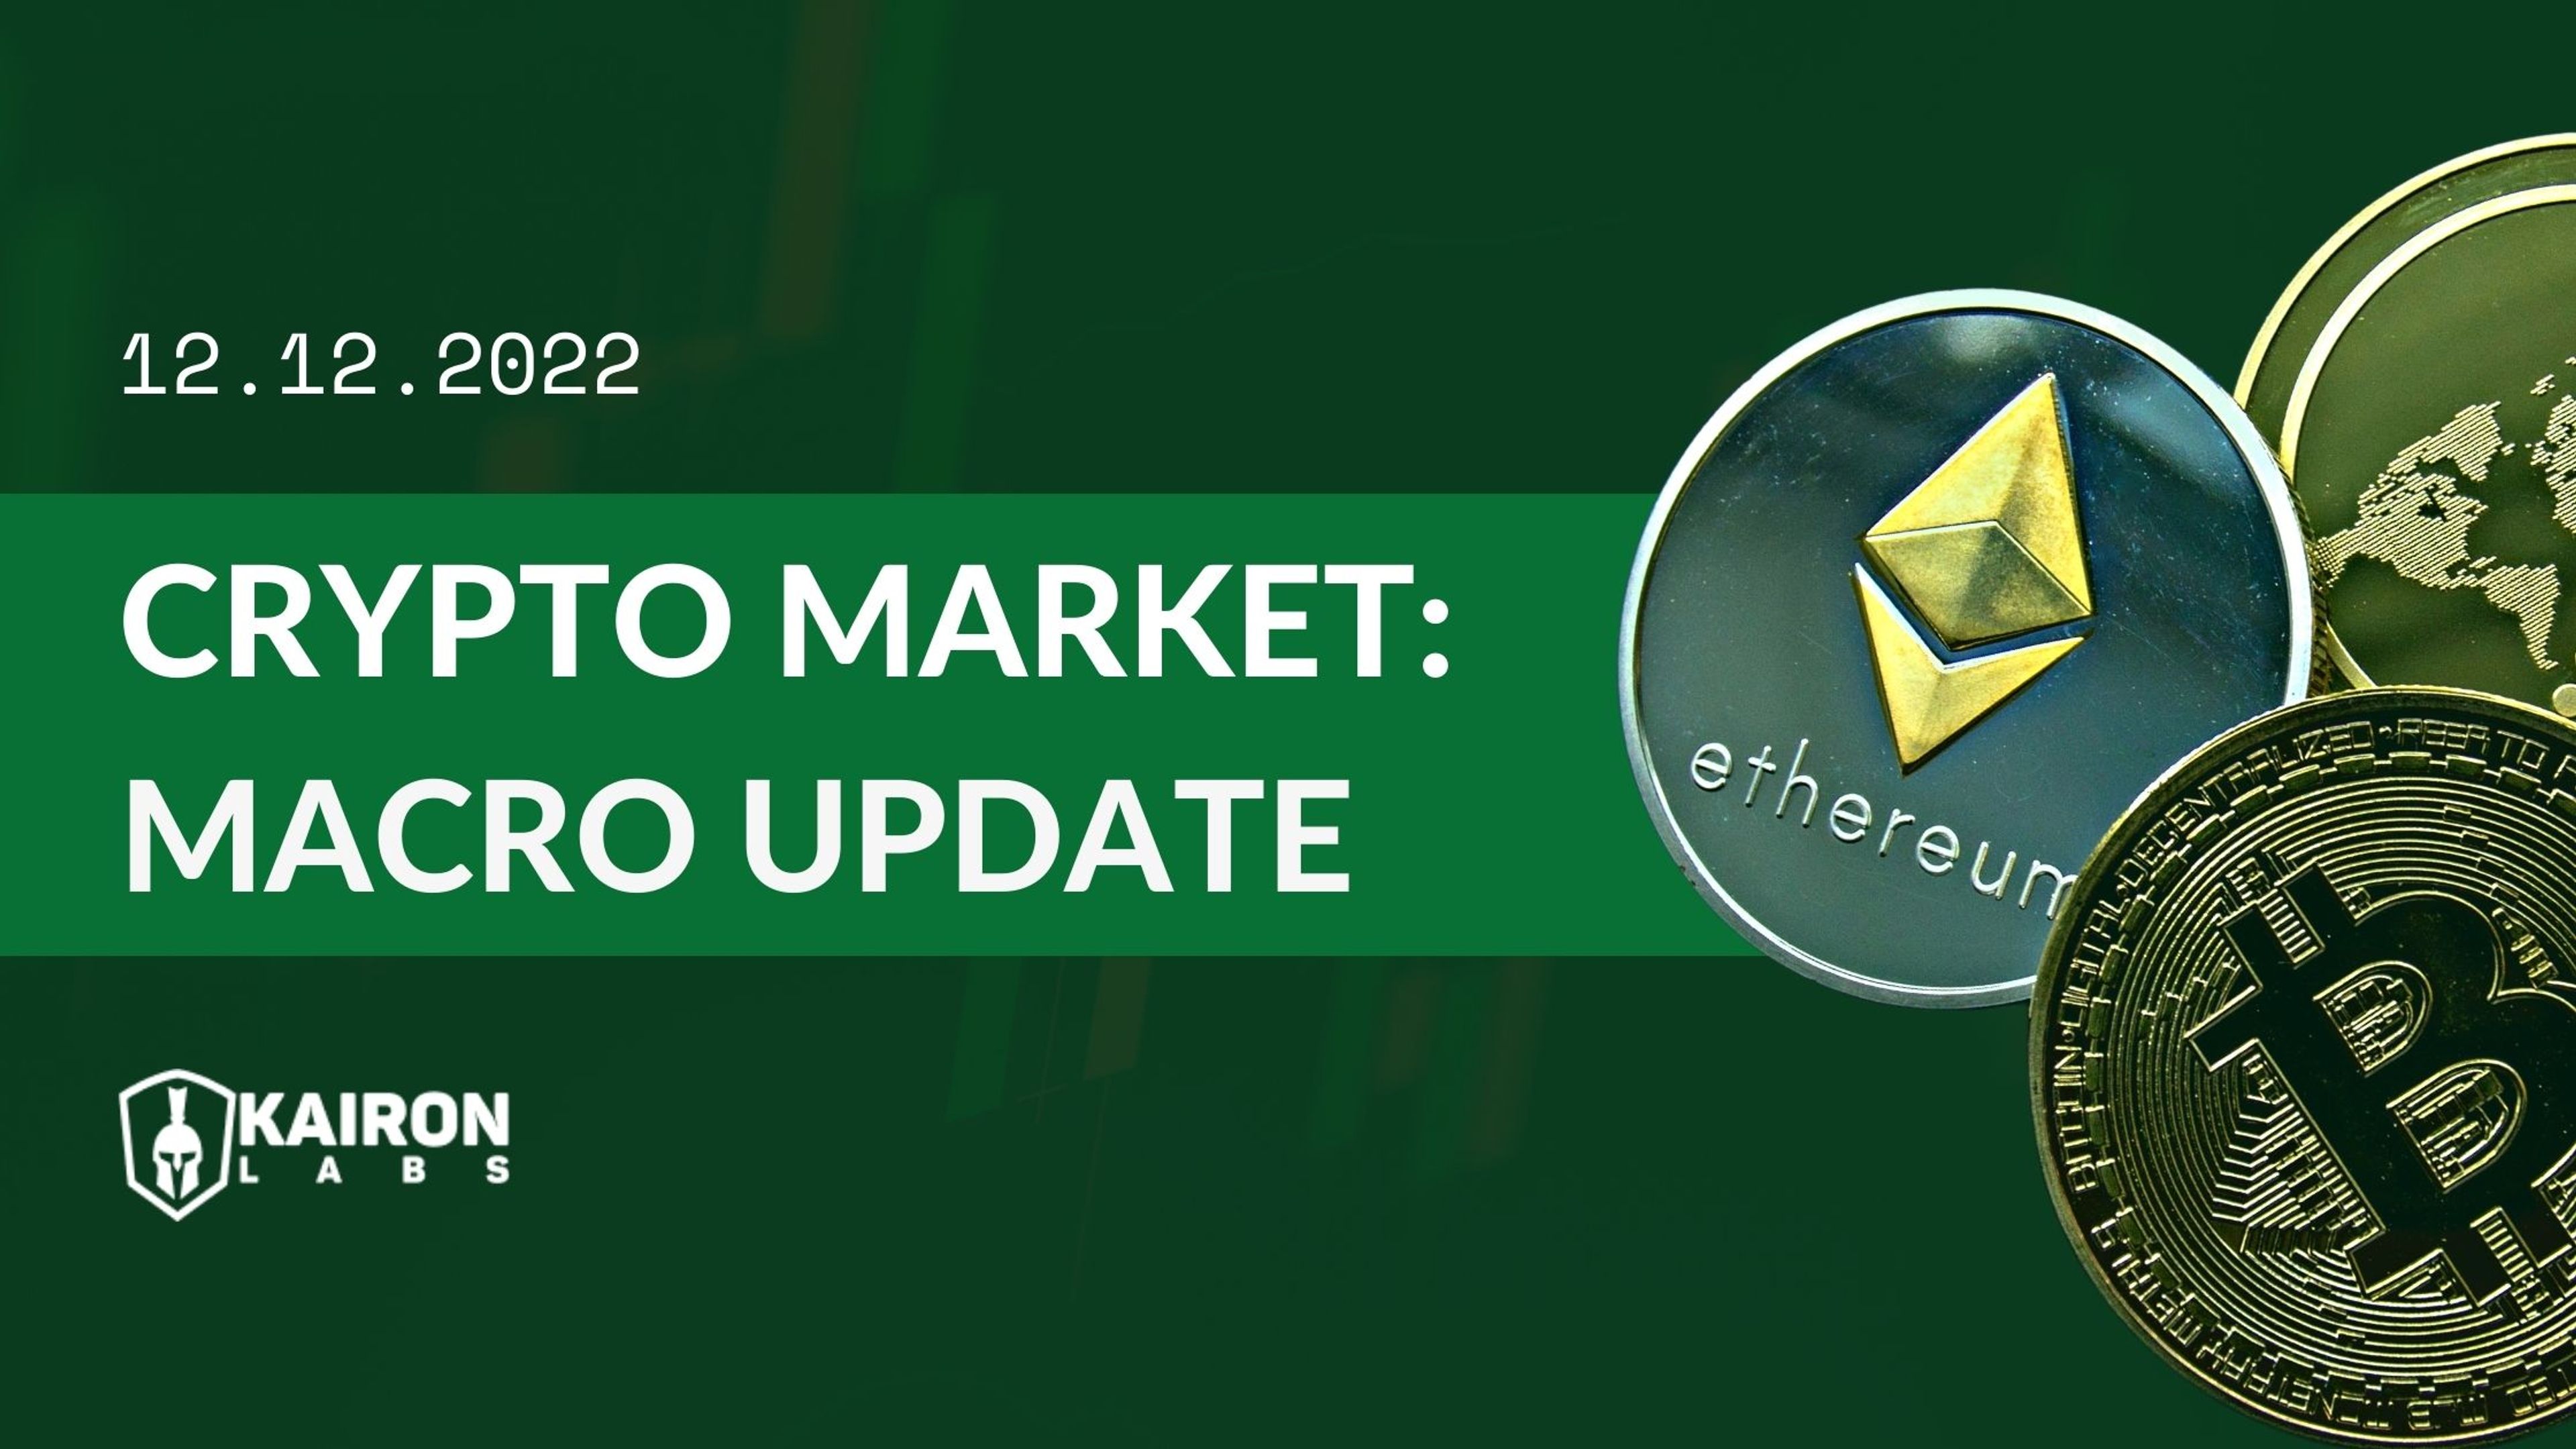 crypto market update - dec 12 2022, kaironlabs.com